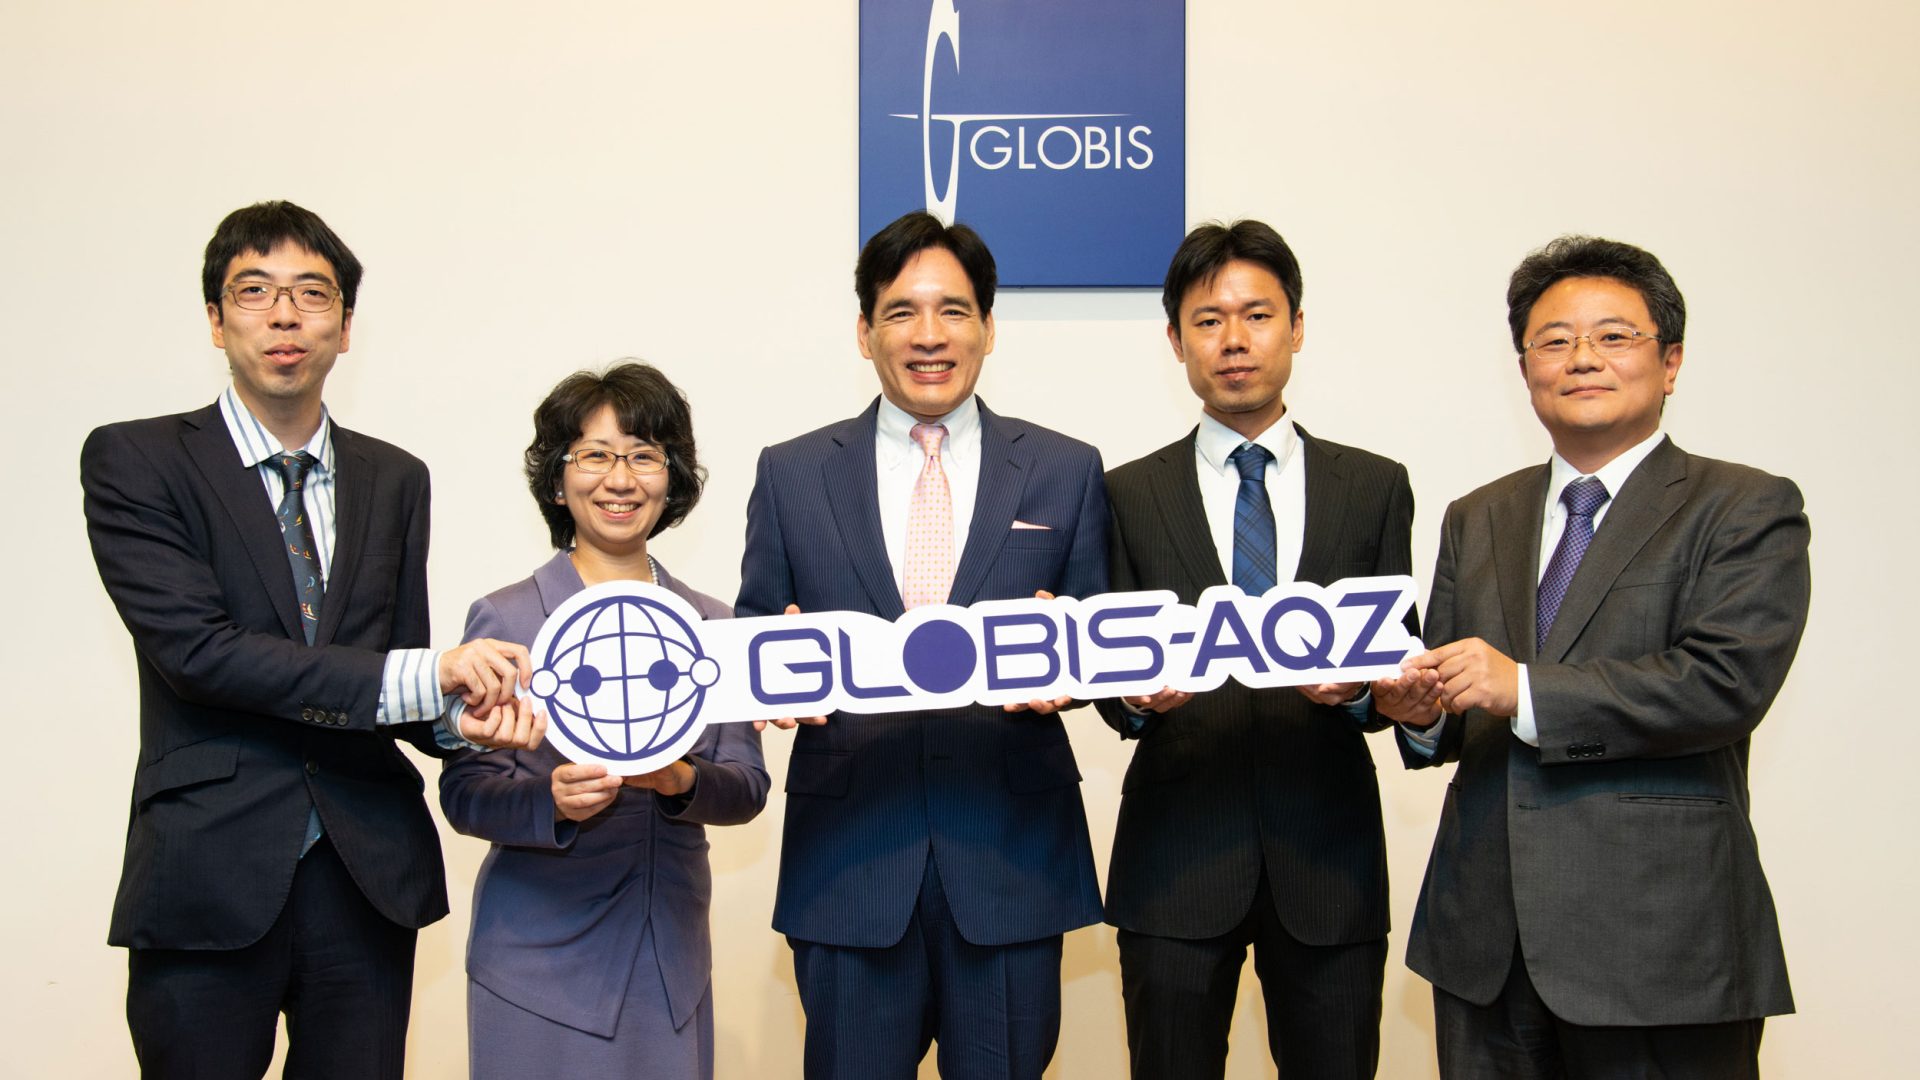 GLOBIS-AQZプロジェクトが始動、囲碁AI世界一と若手棋士育成を目指せ